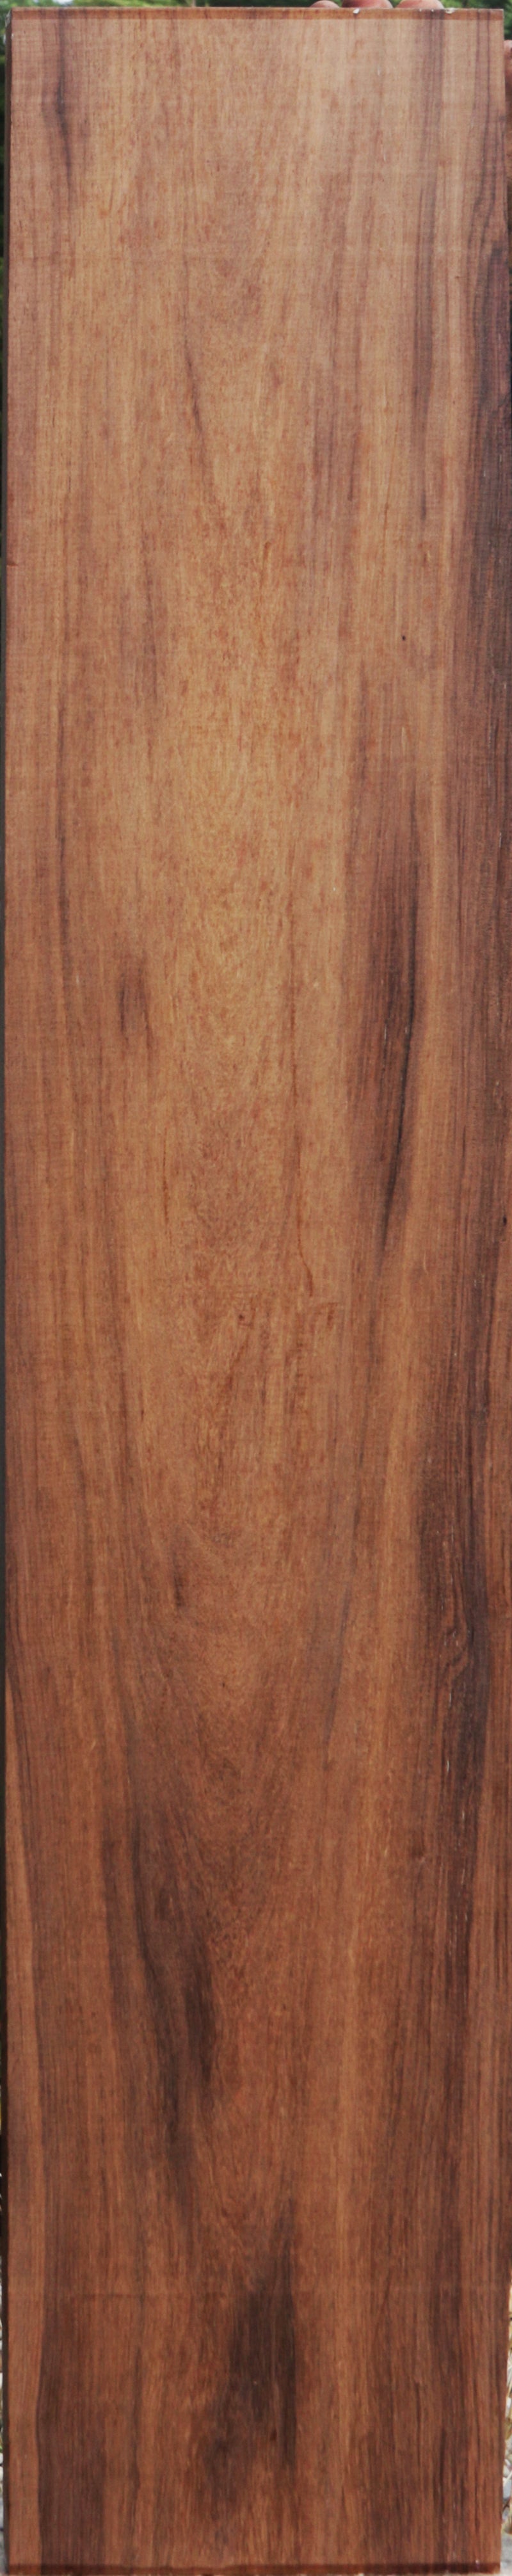 Extra Fancy Madagascar Rosewood Lumber